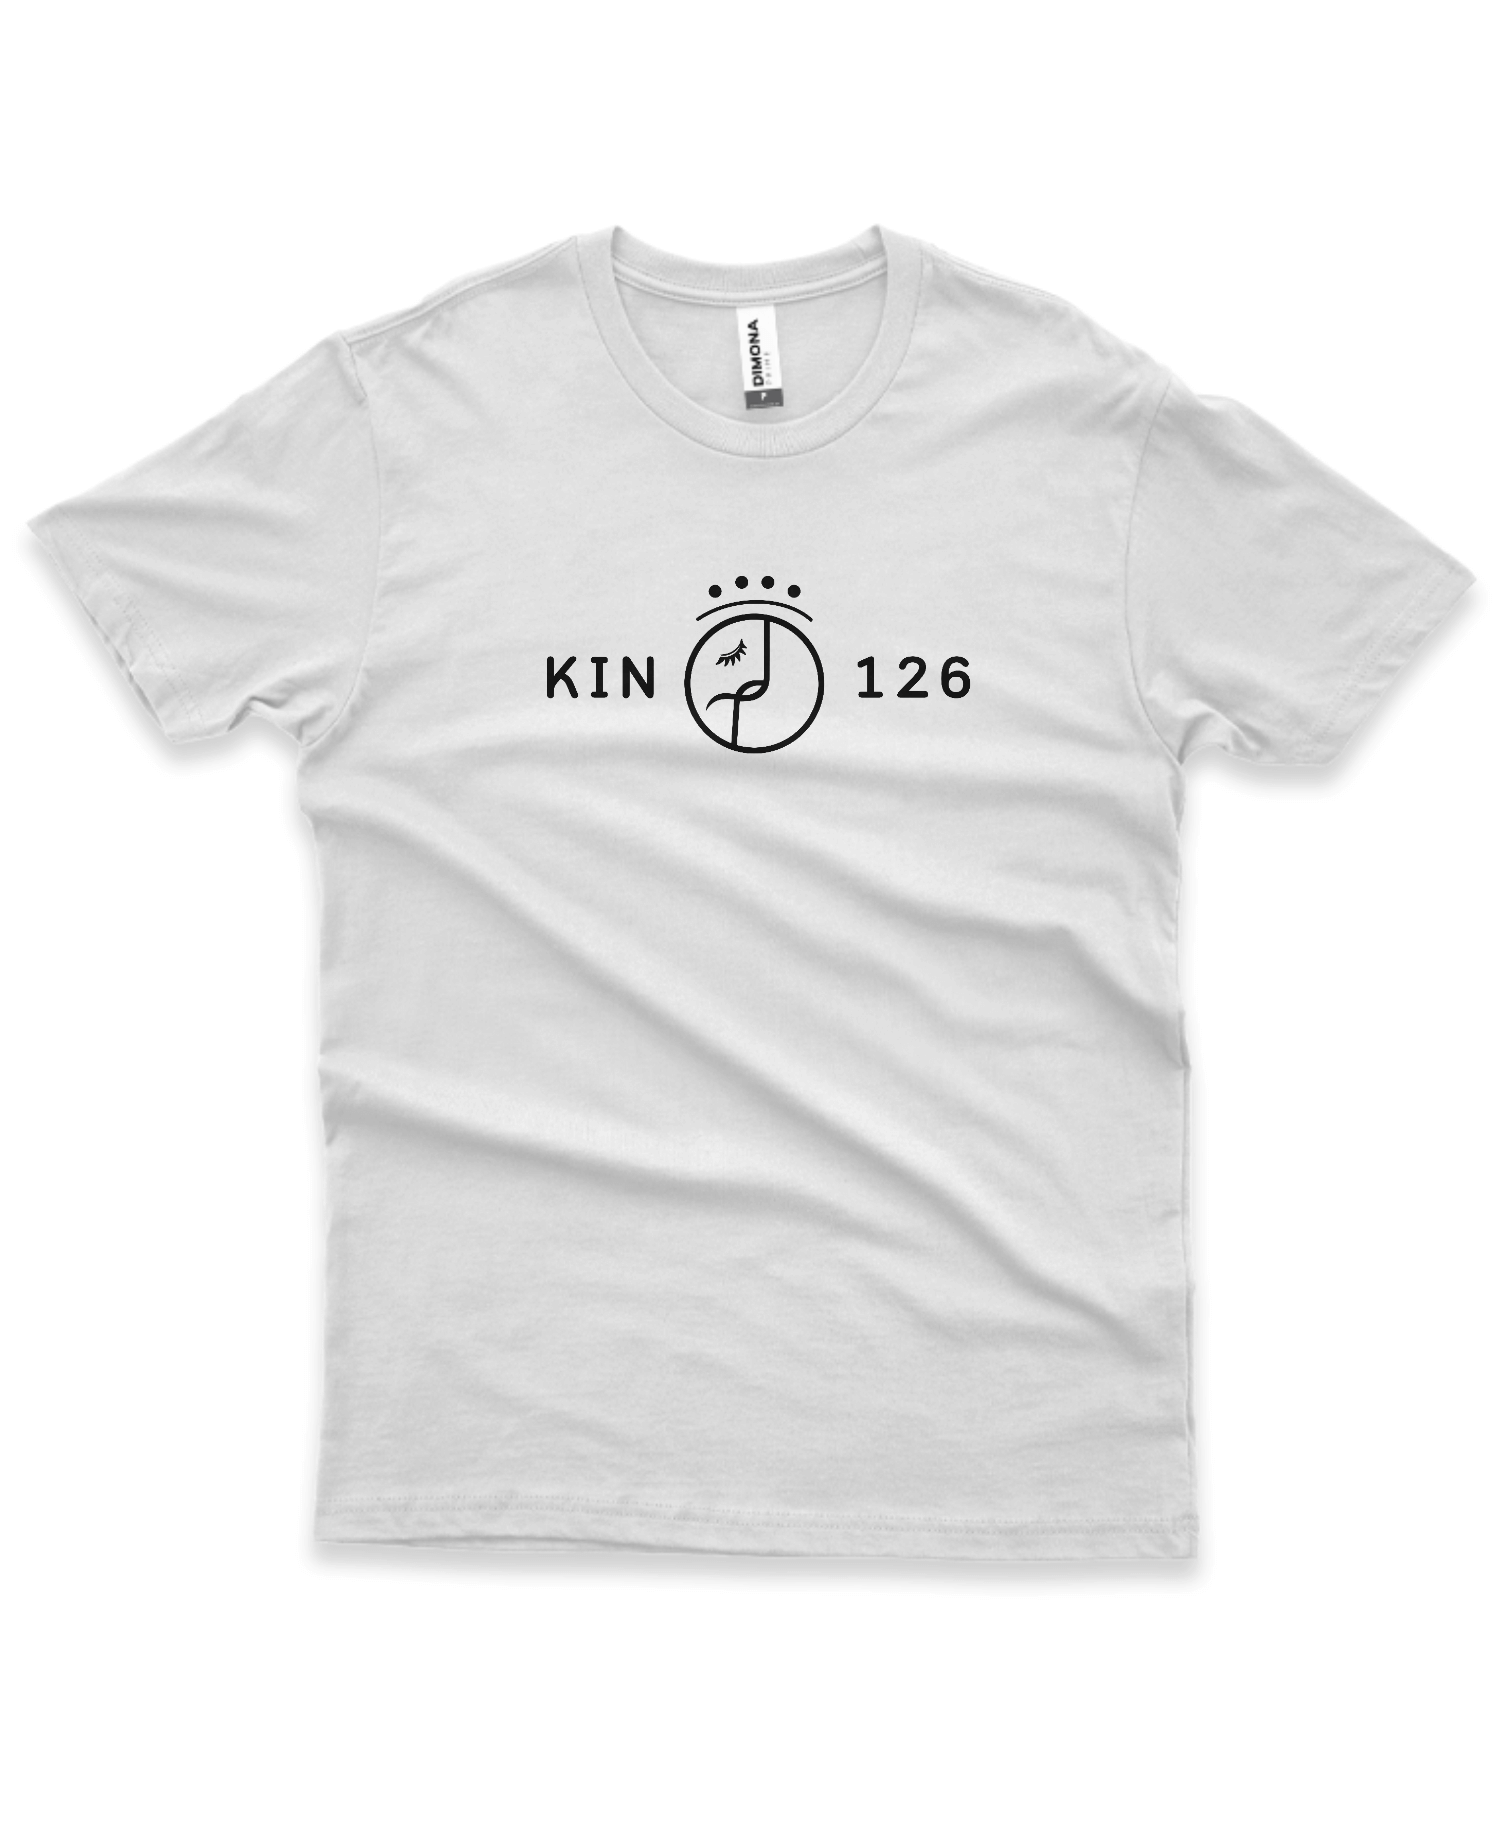 Camiseta Branca Kin 126 - Enlaçador de Mundos Solar